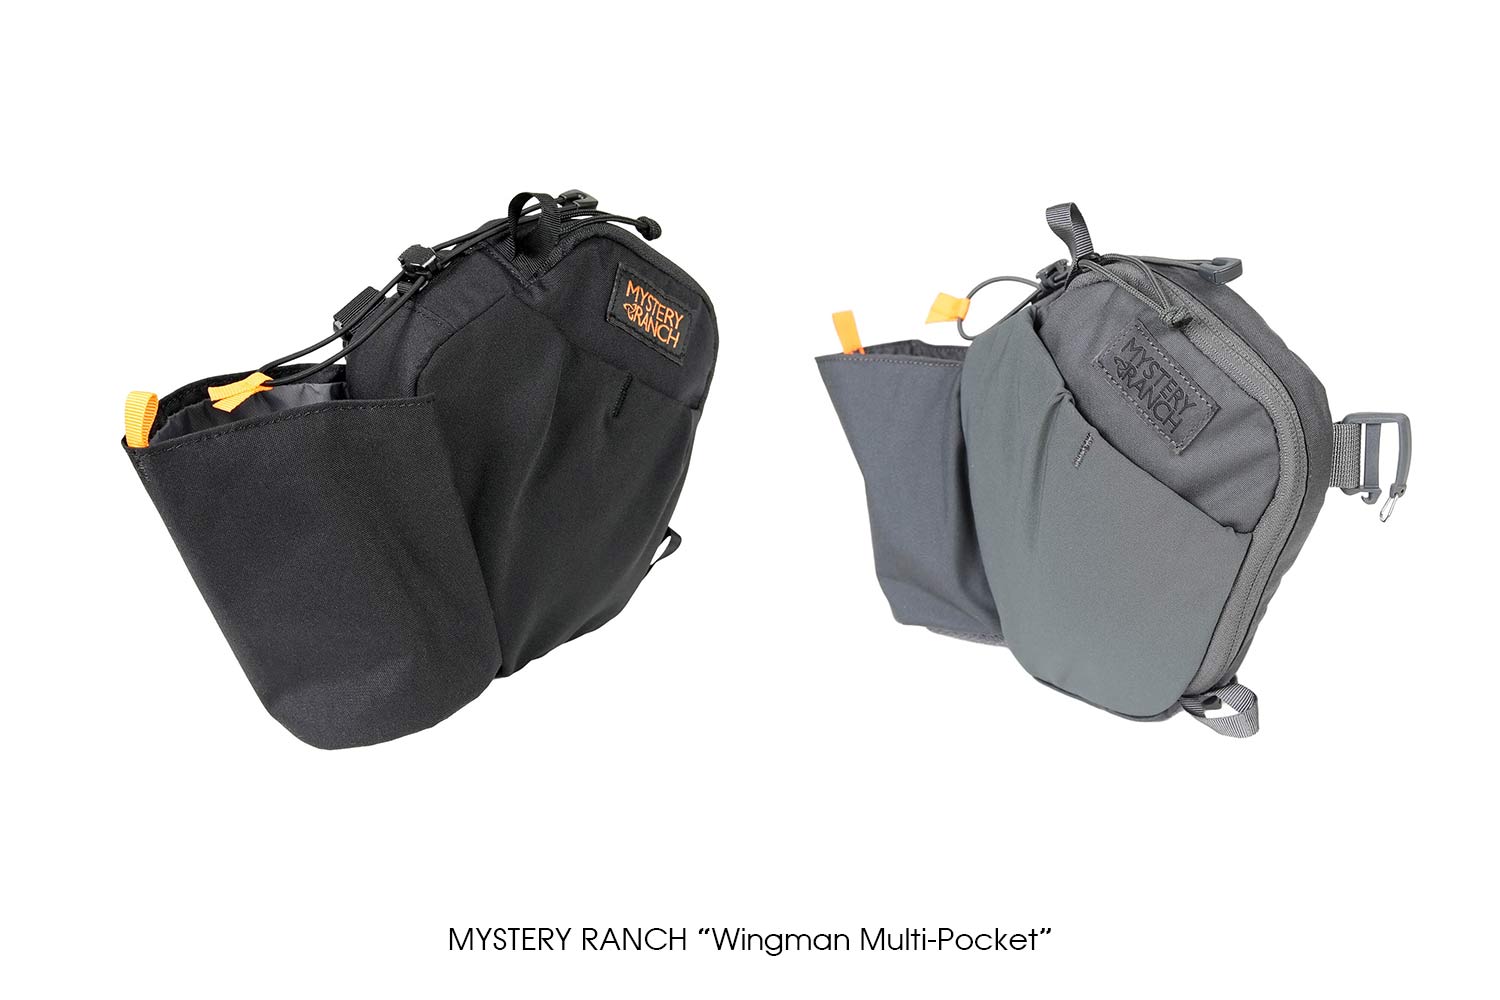 MYSTERY RANCH "Wingman Multi-Pocket"